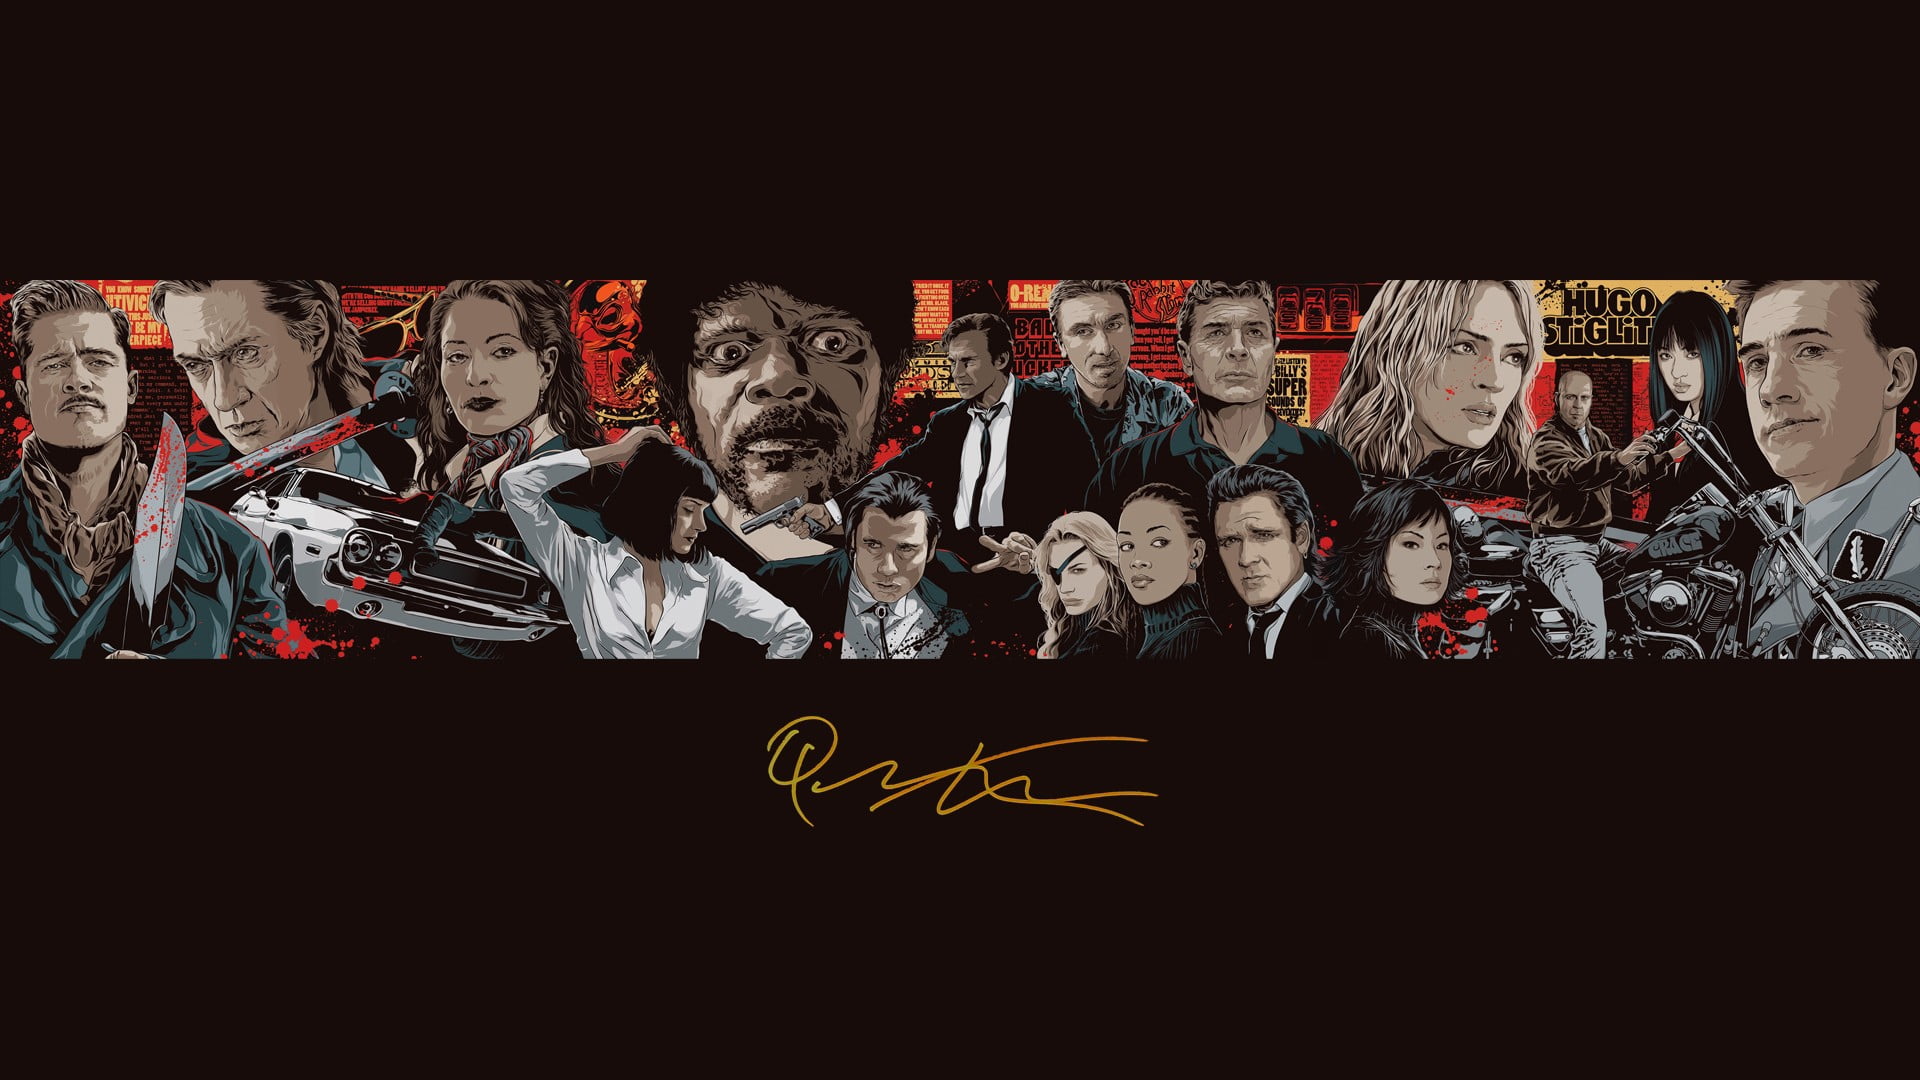 Group Of People Illustration Quentin Tarantino Movies